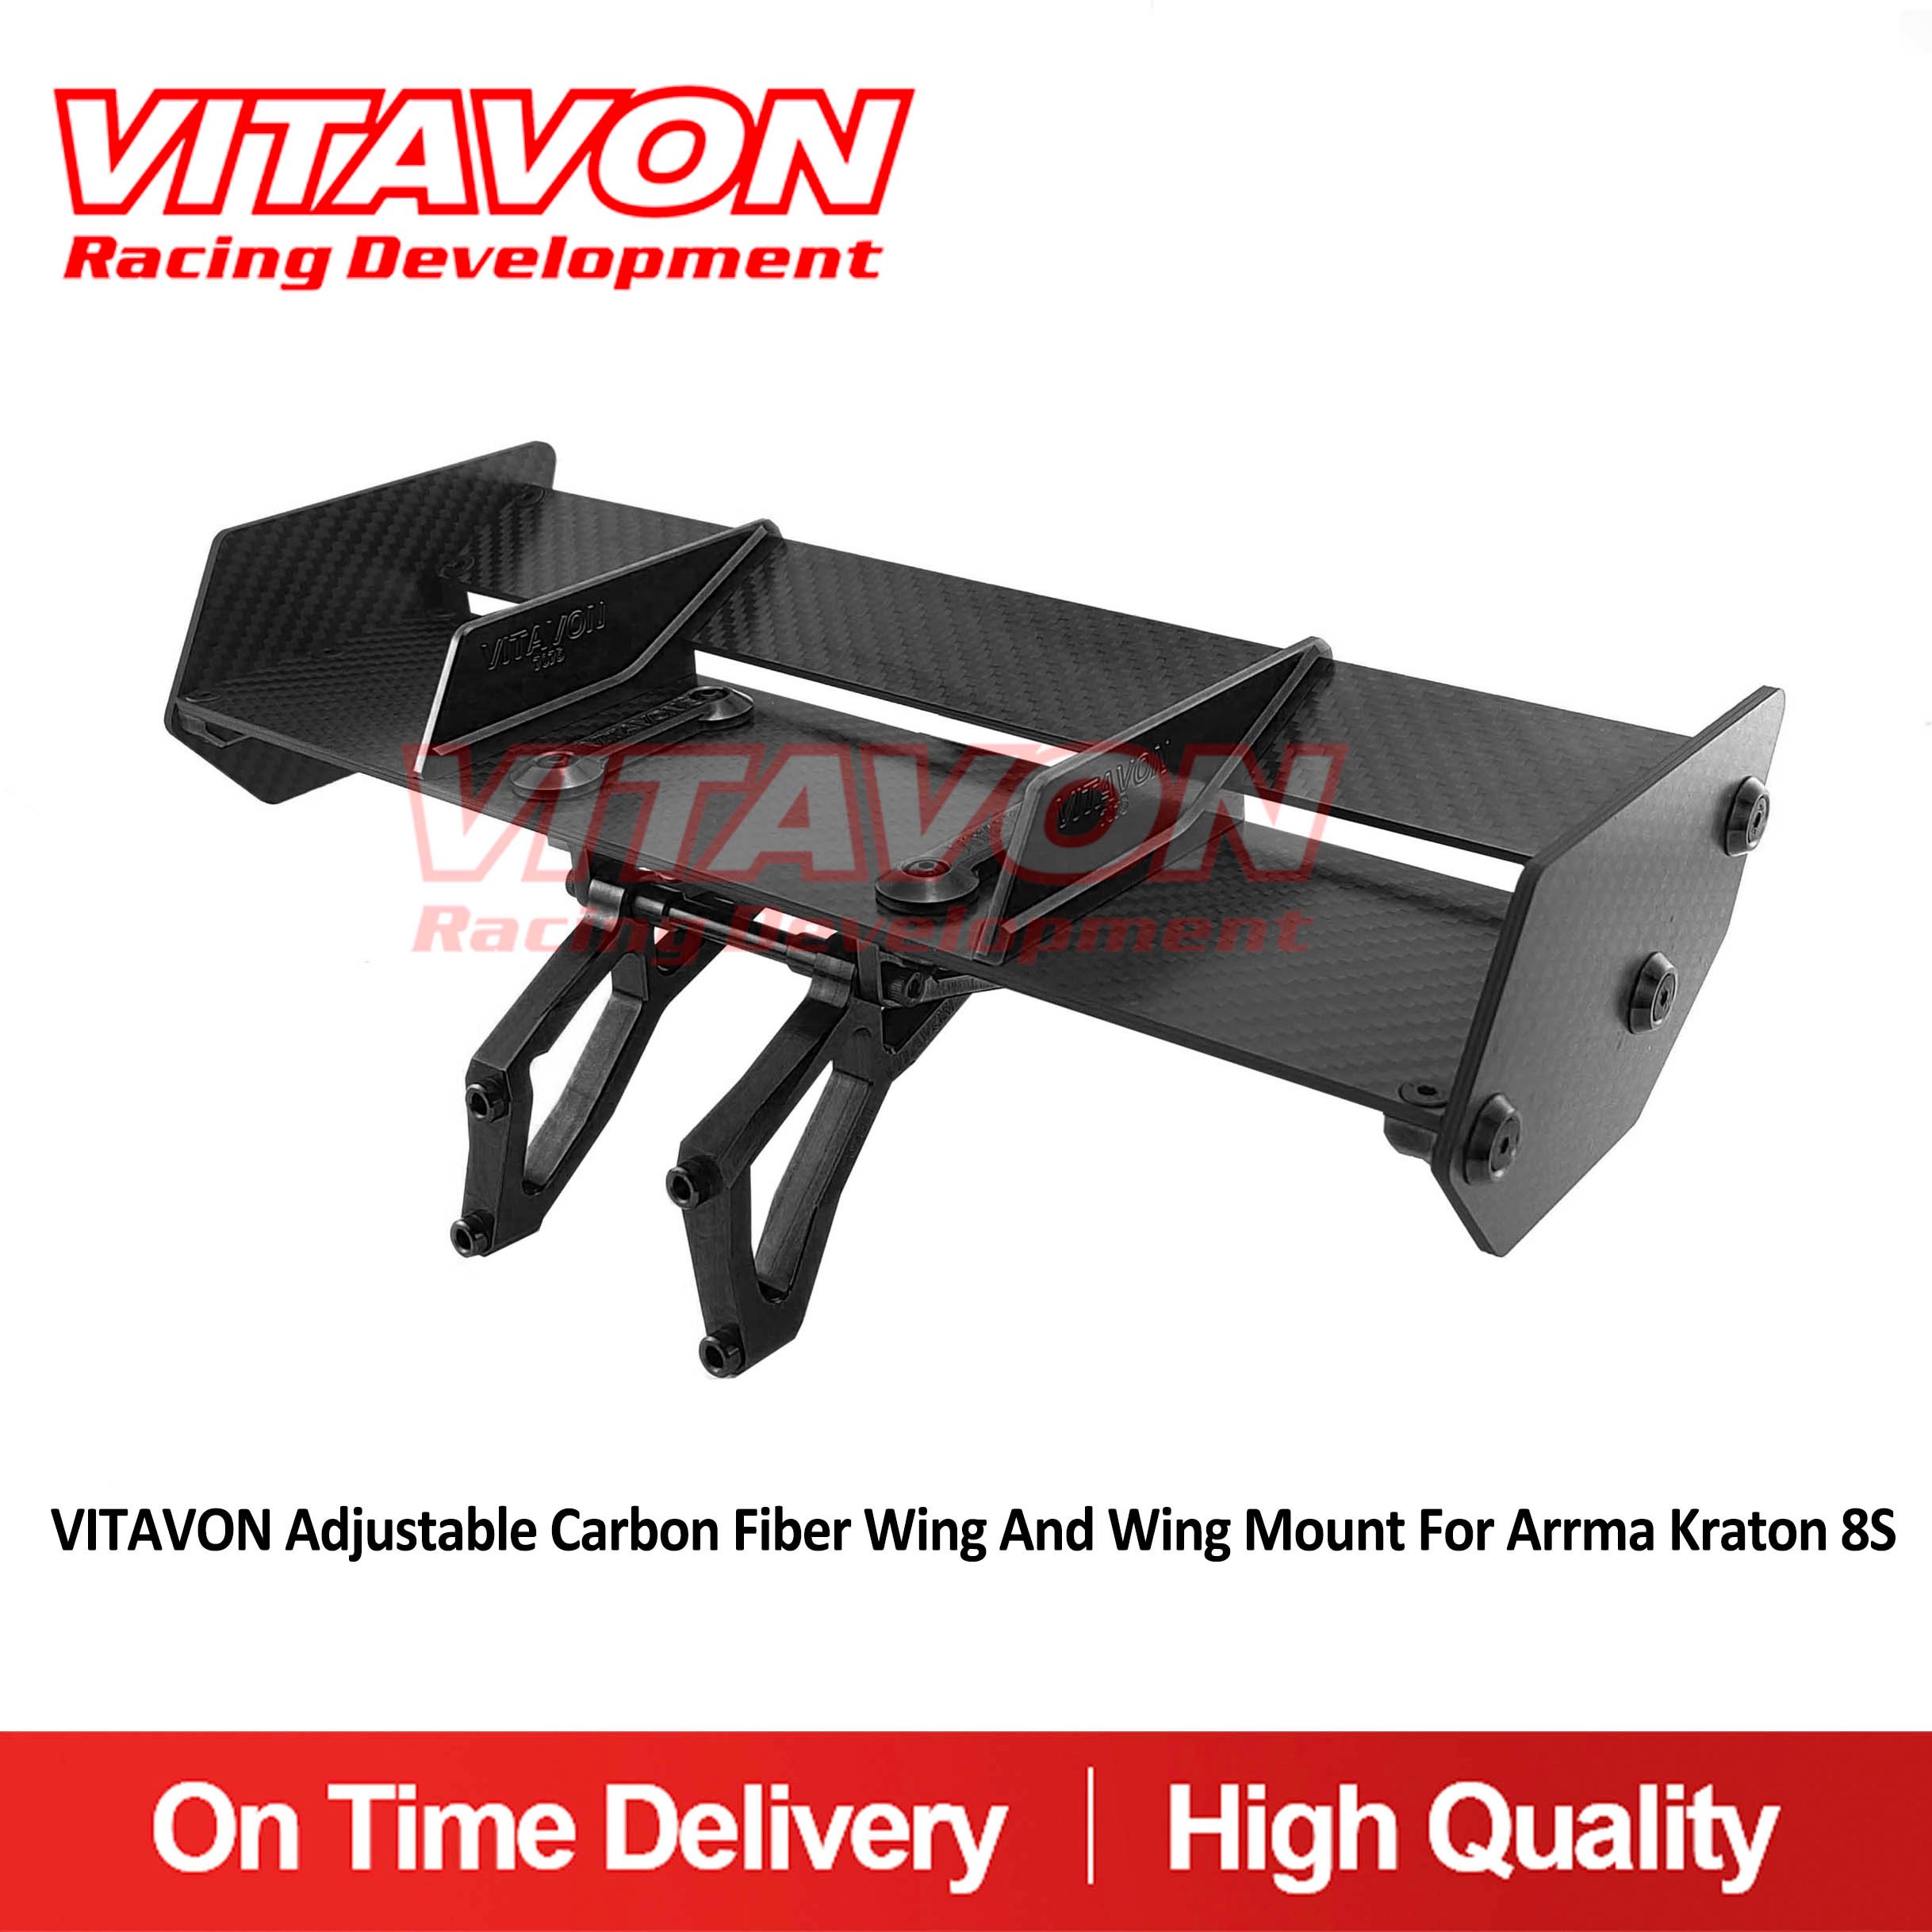 VITAVON Adjustable Carbon Fiber Wing And Wing Mount For Arrma Kraton 8S